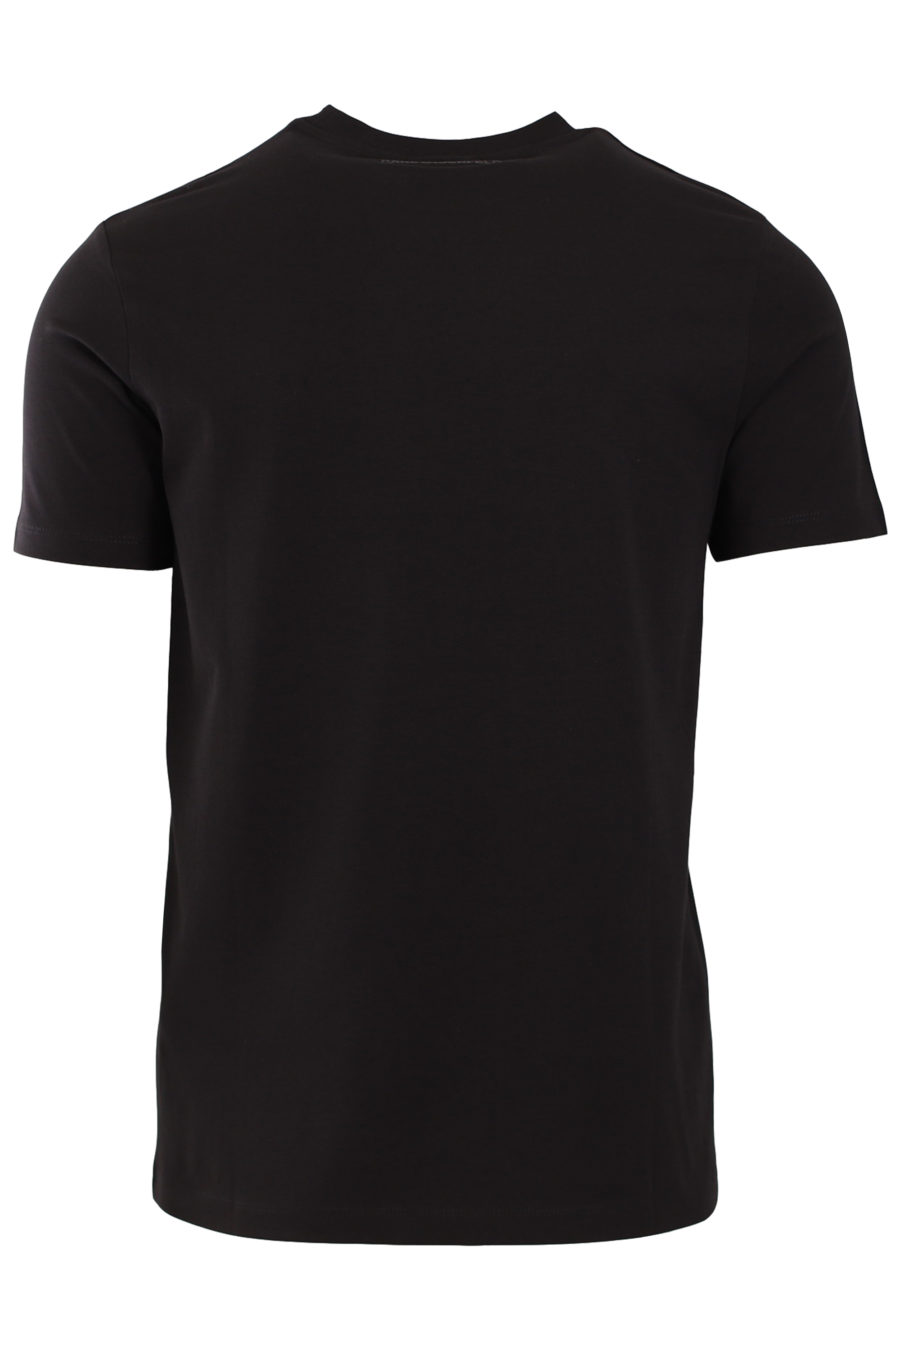 Schwarzes T-Shirt mit Logodruck - 656be8051bb09fd4dfc89fb10ae4d16b8734ee5d